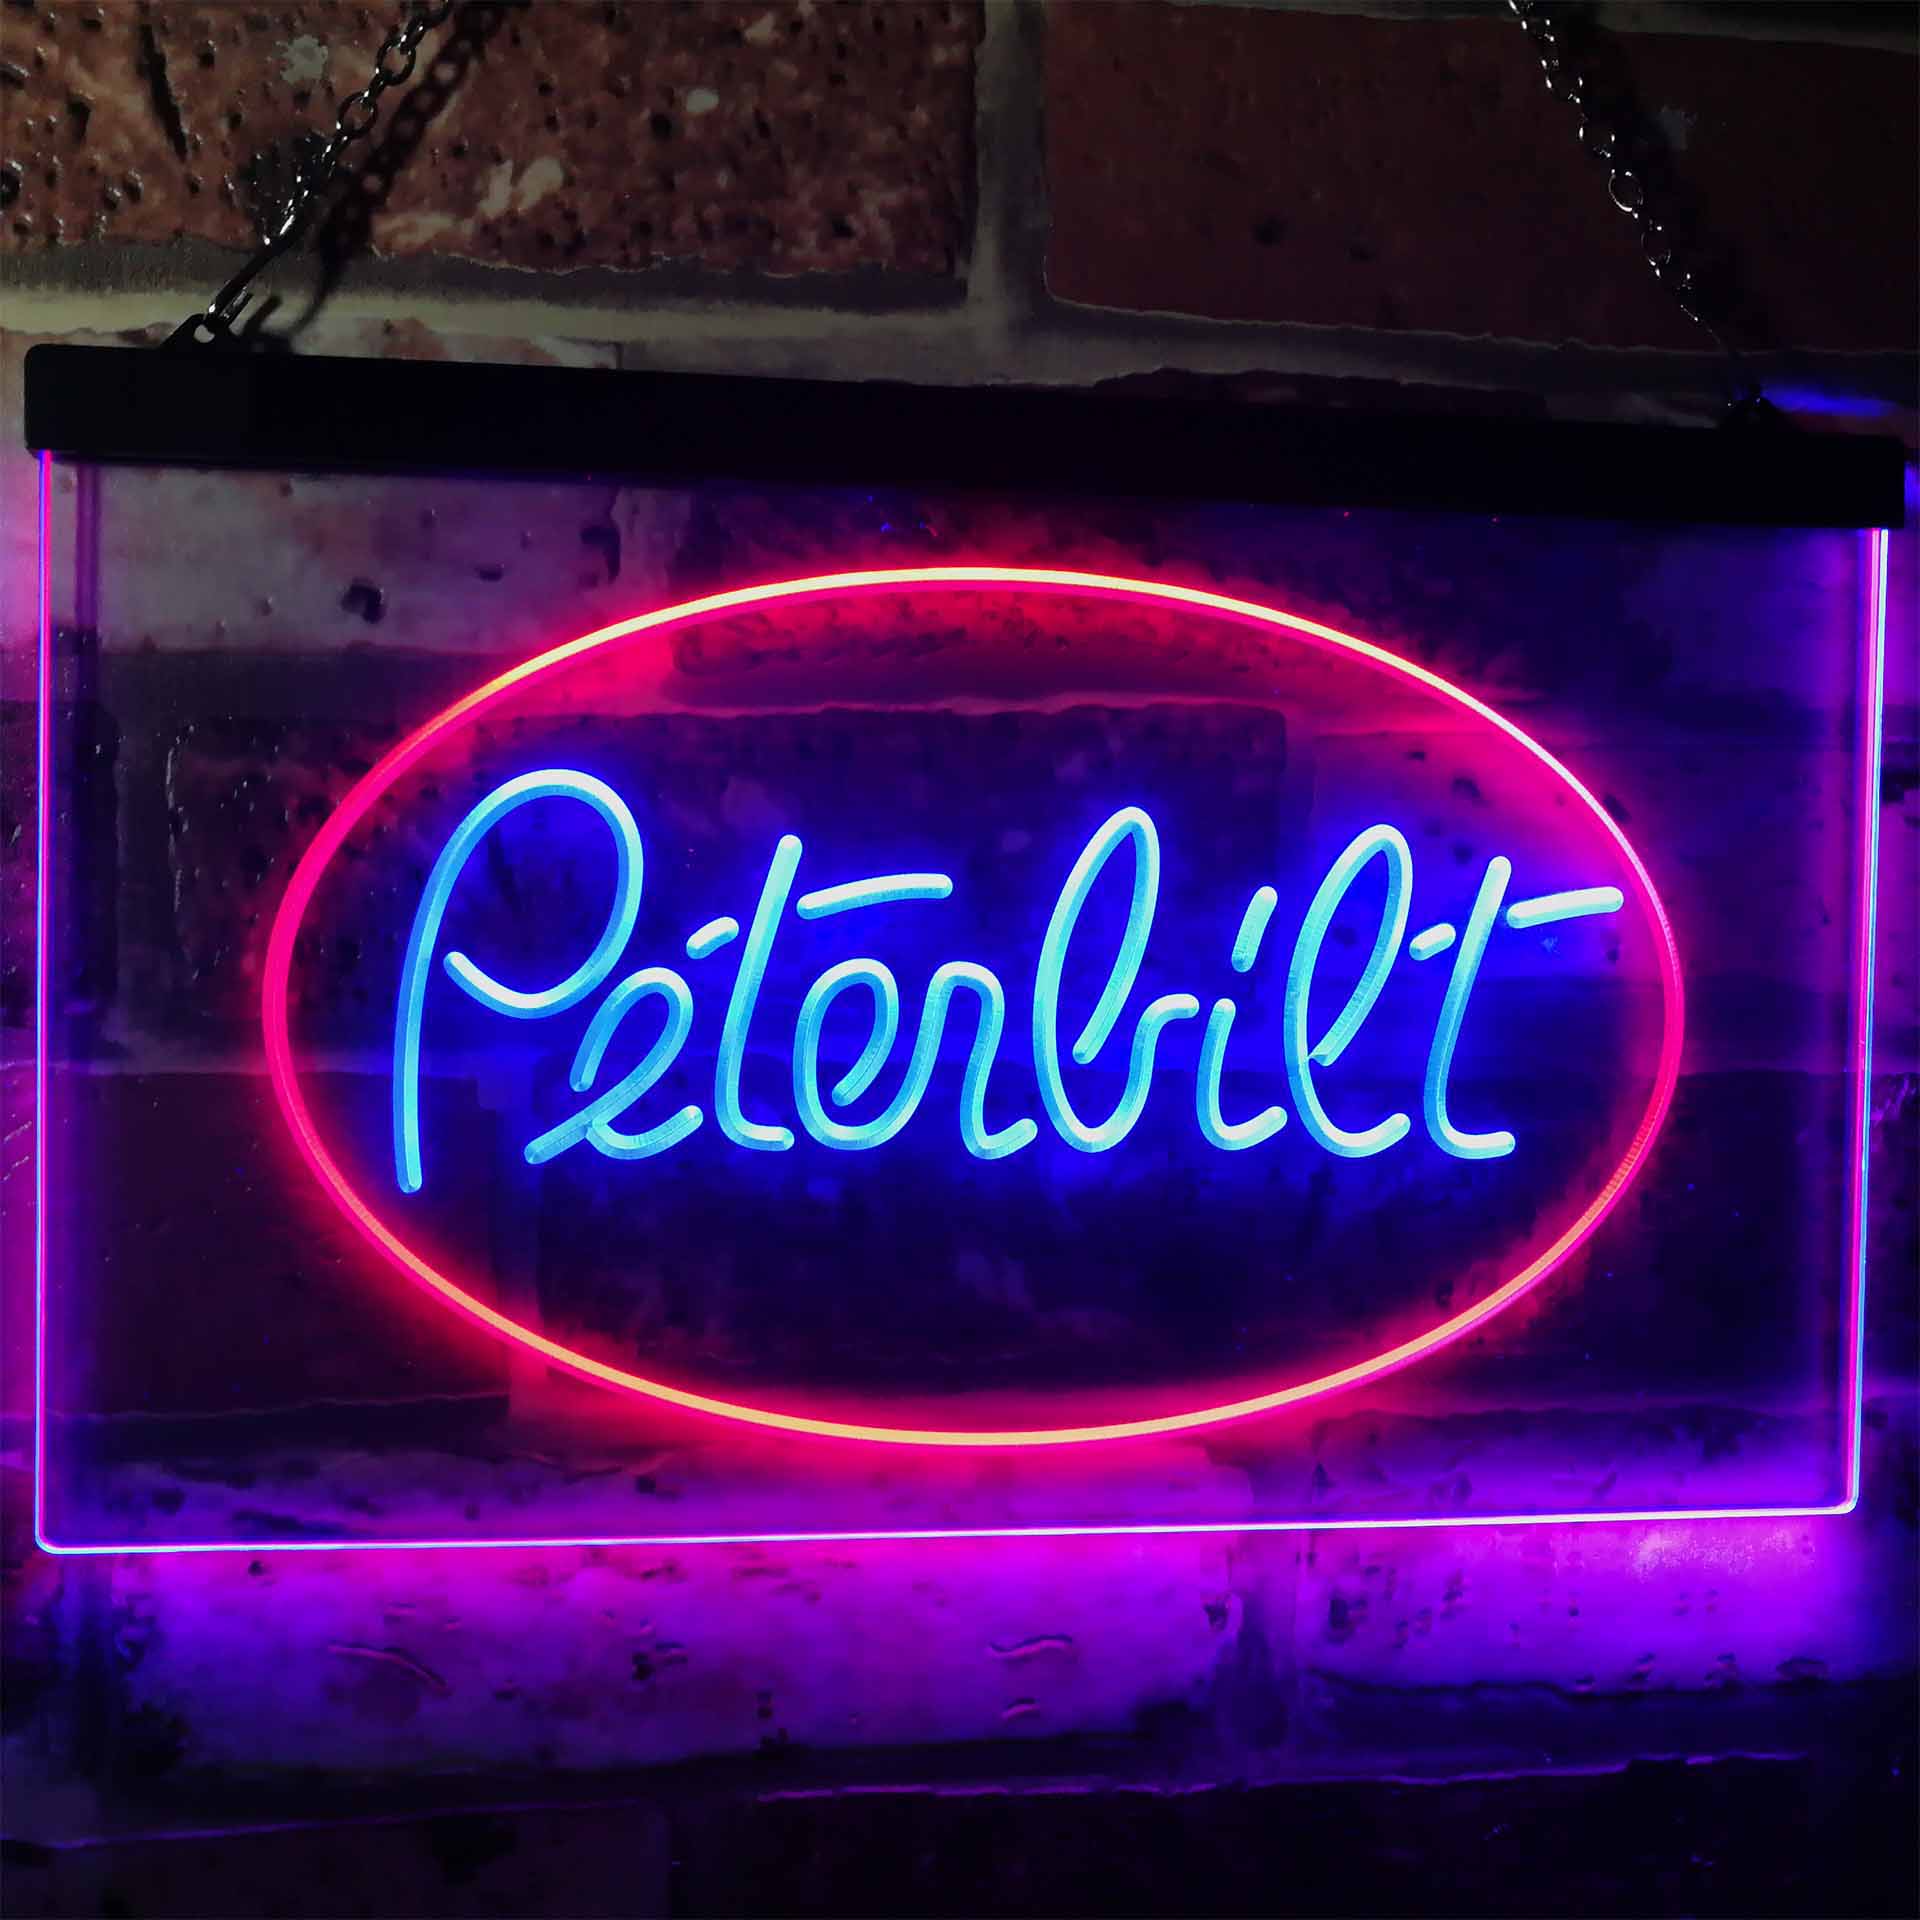 Peterbilt Car Transport Bar LED Neon Sign